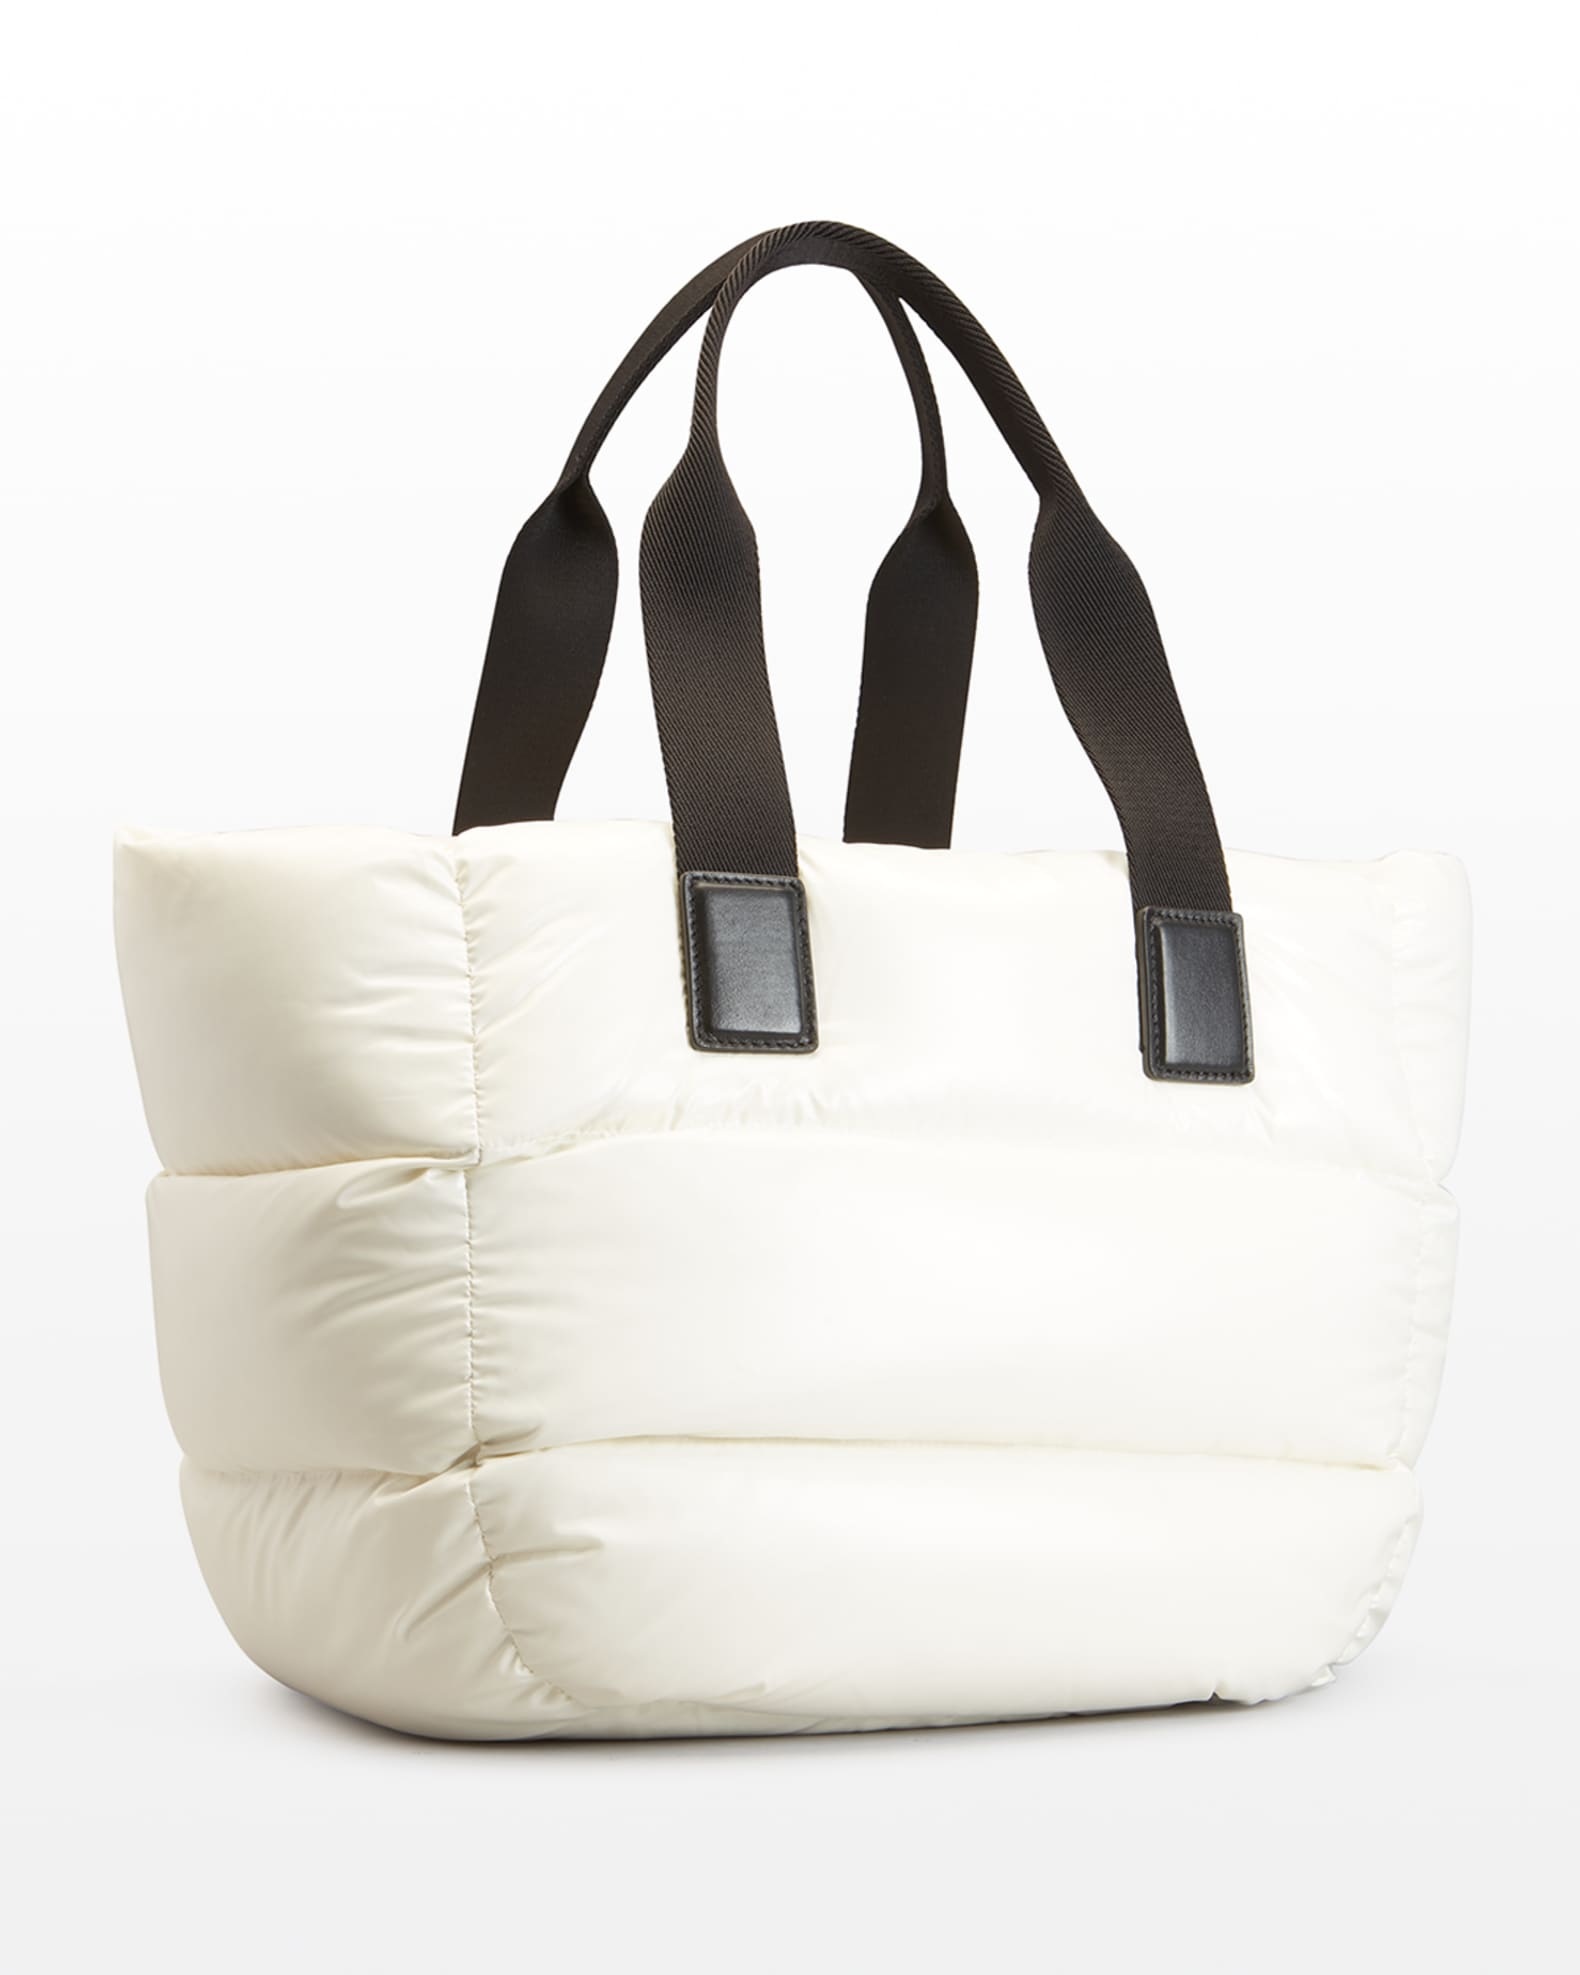 Moncler Caradoc Tote Bag | Neiman Marcus